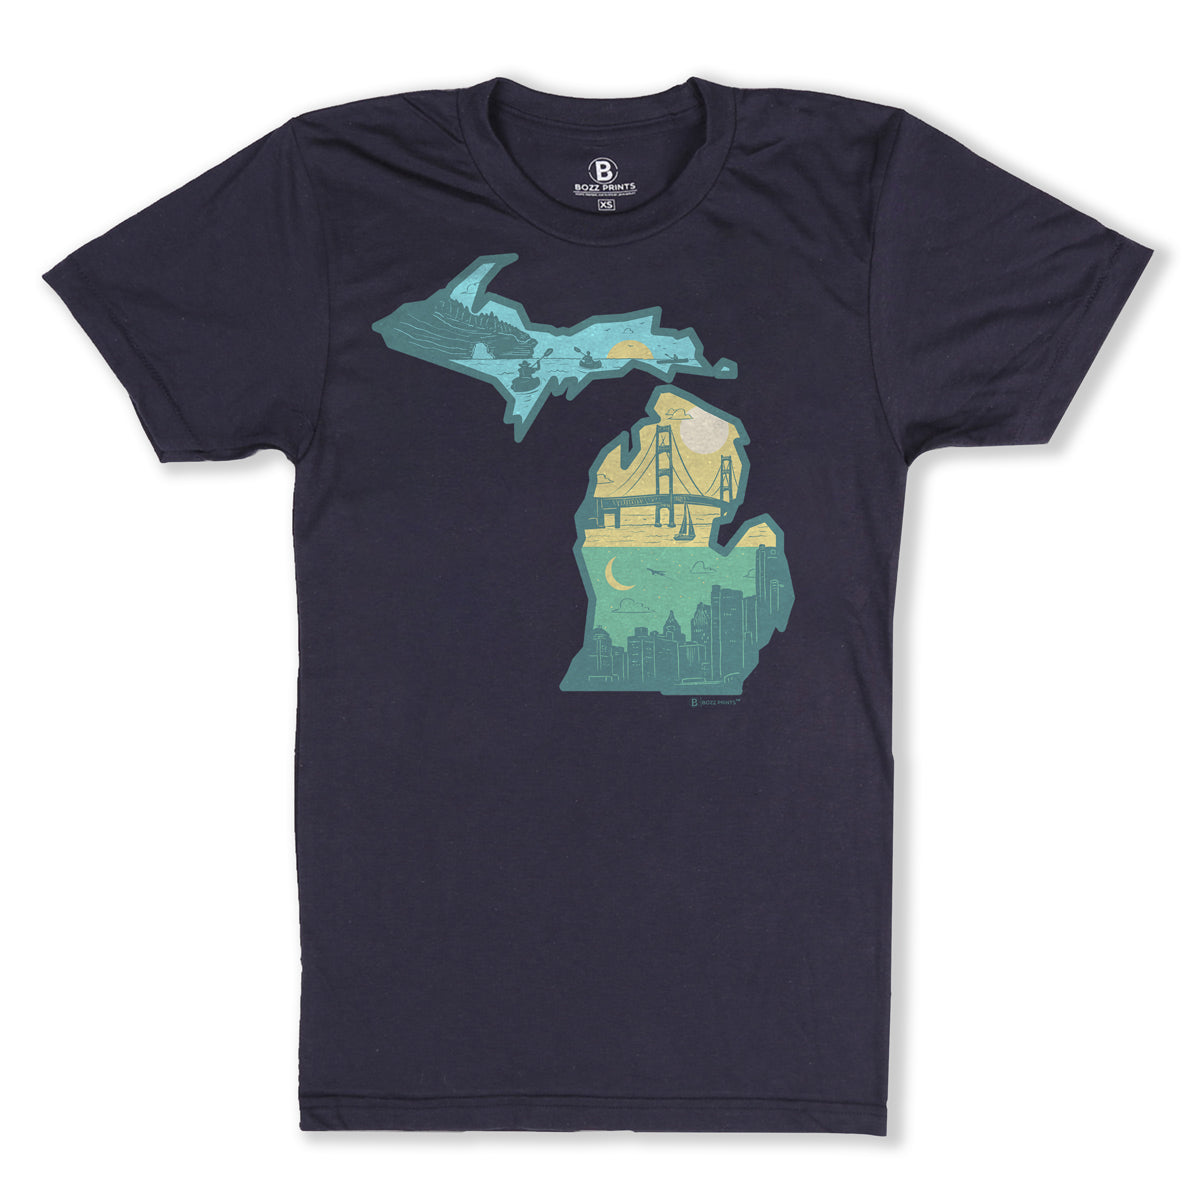 Layers of Michigan T-Shirt - Bozz Prints